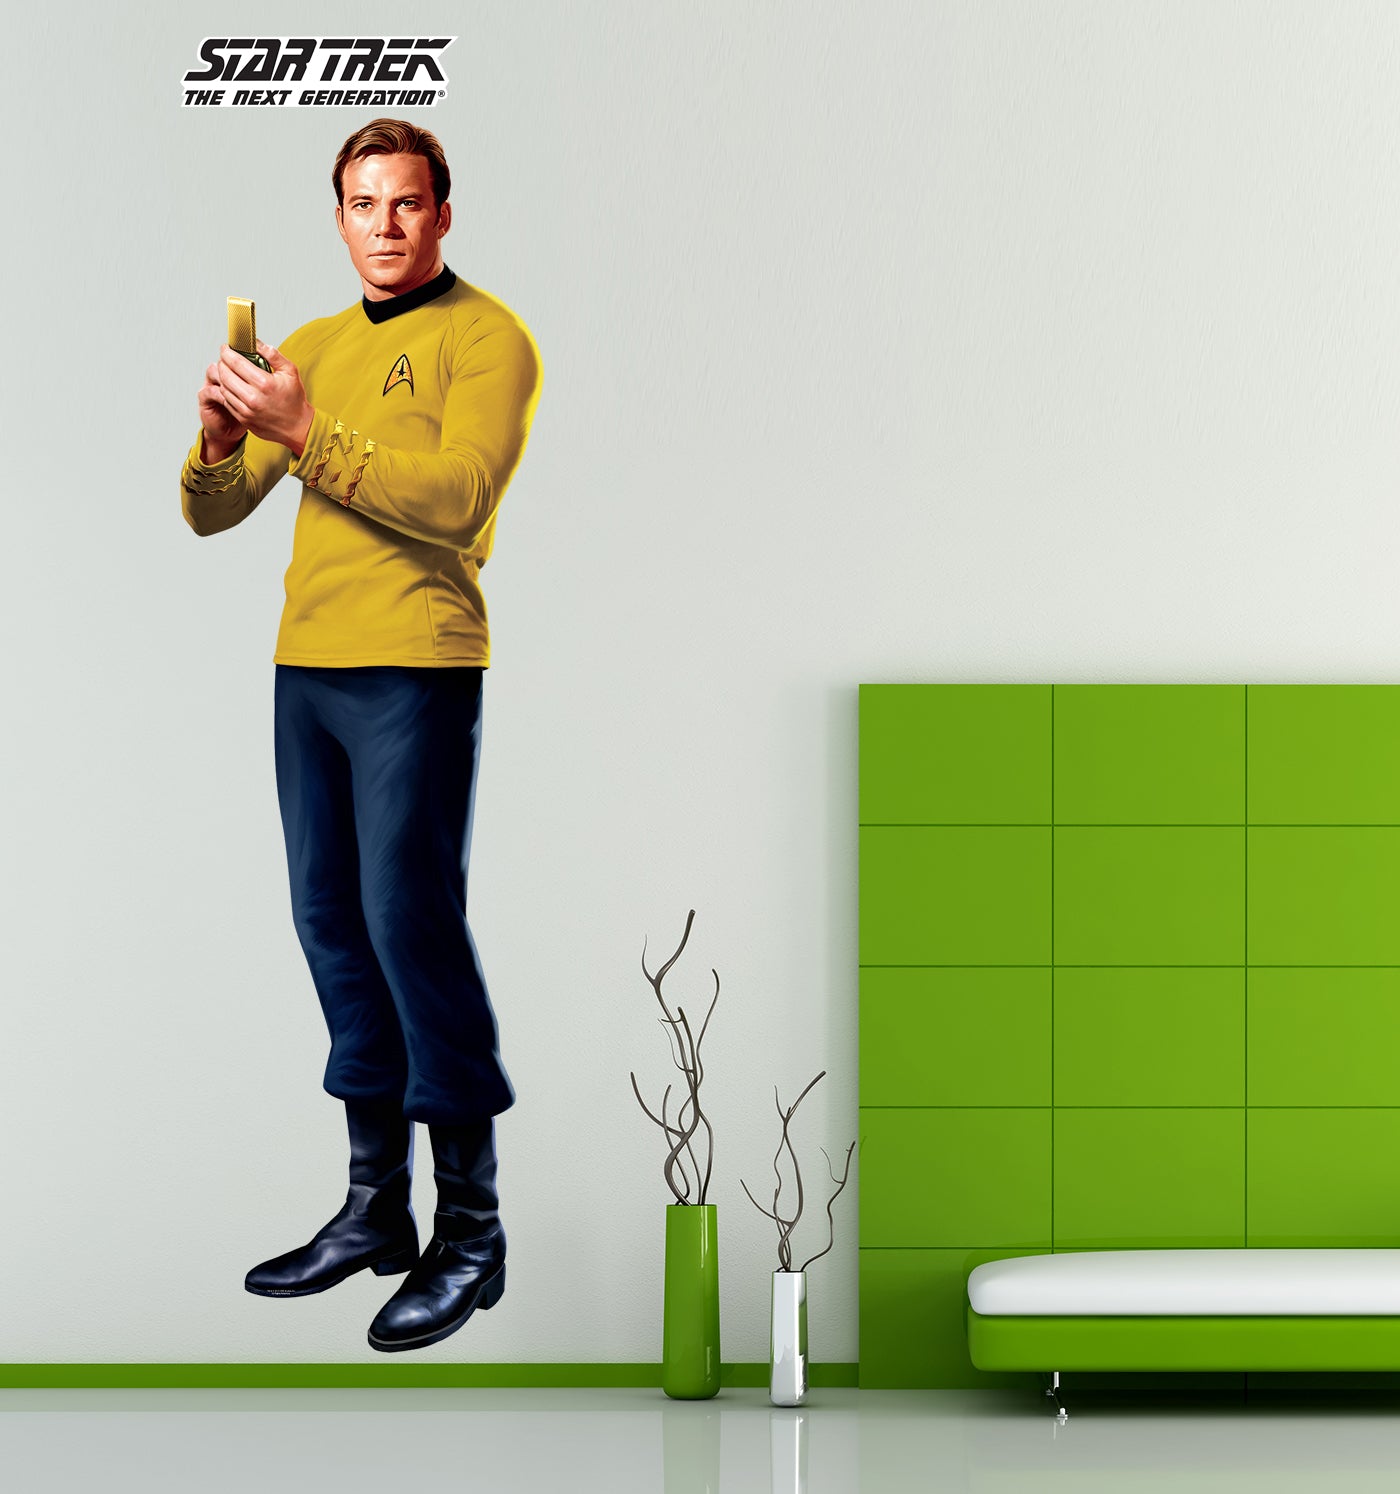 Star Trek: The Original Series Capitaine Kirk Autocollant mural